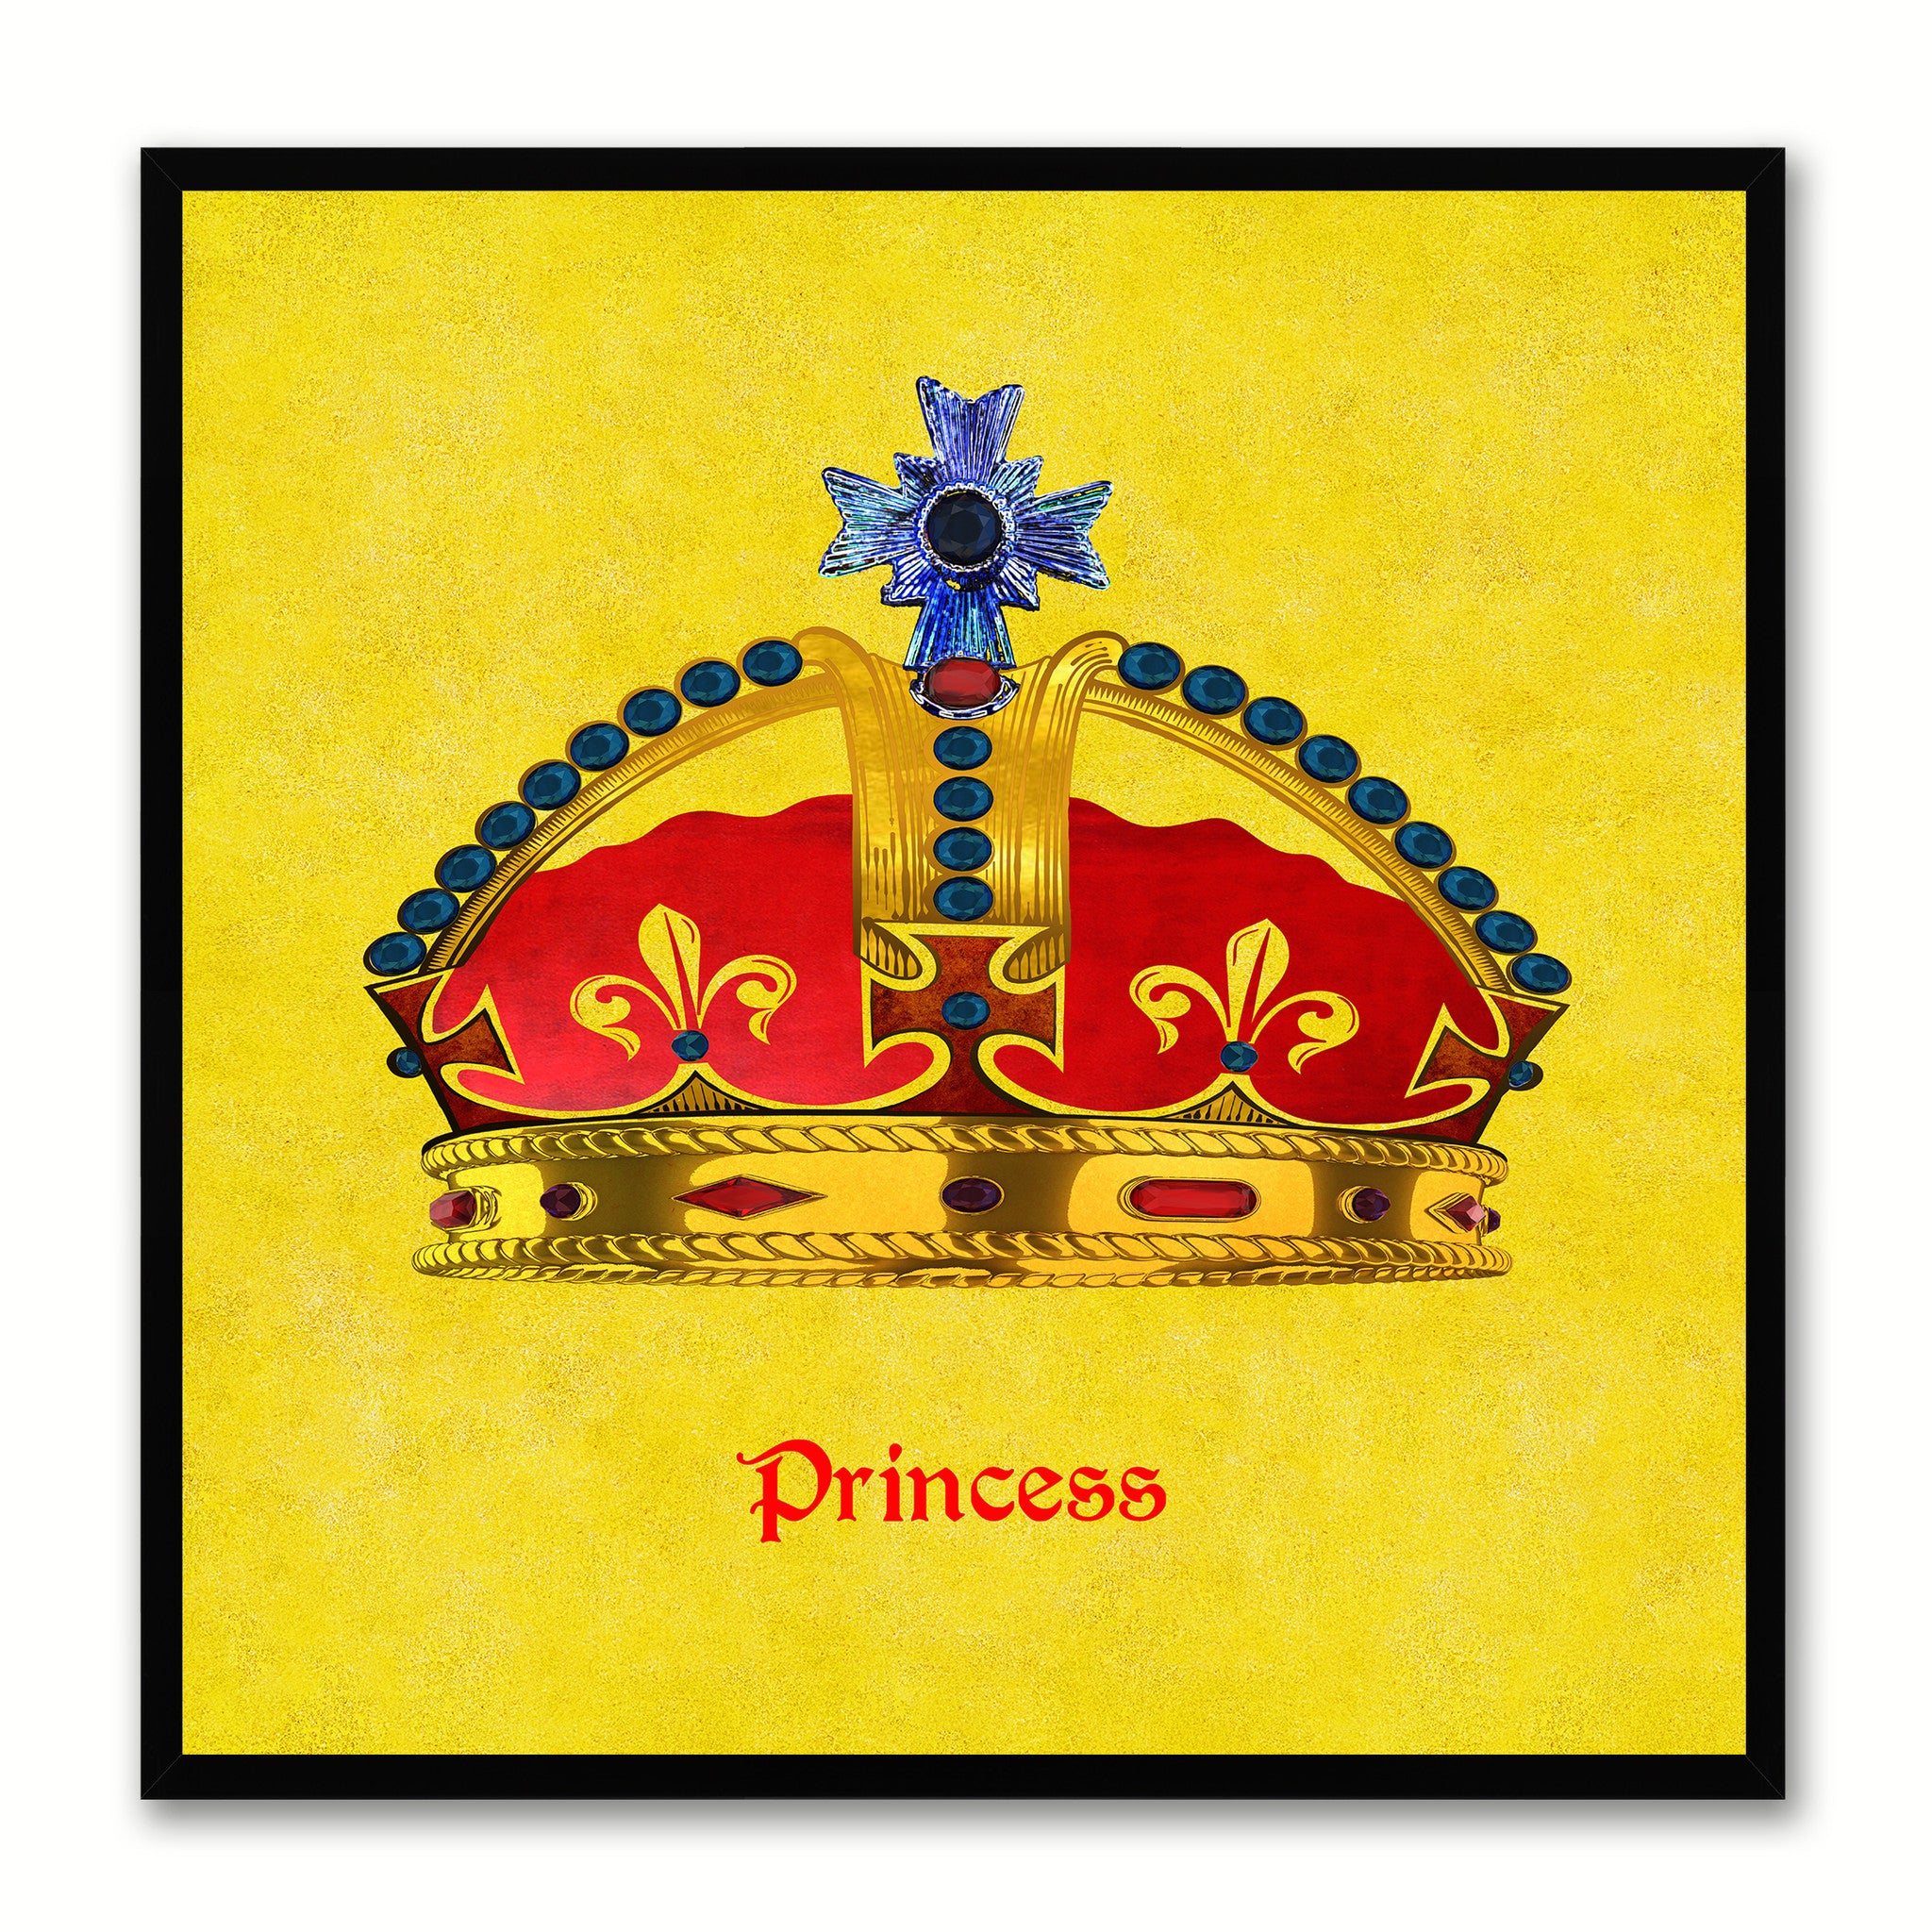 Princess Yellow Canvas Print Black Frame Kids Bedroom Wall Home Décor